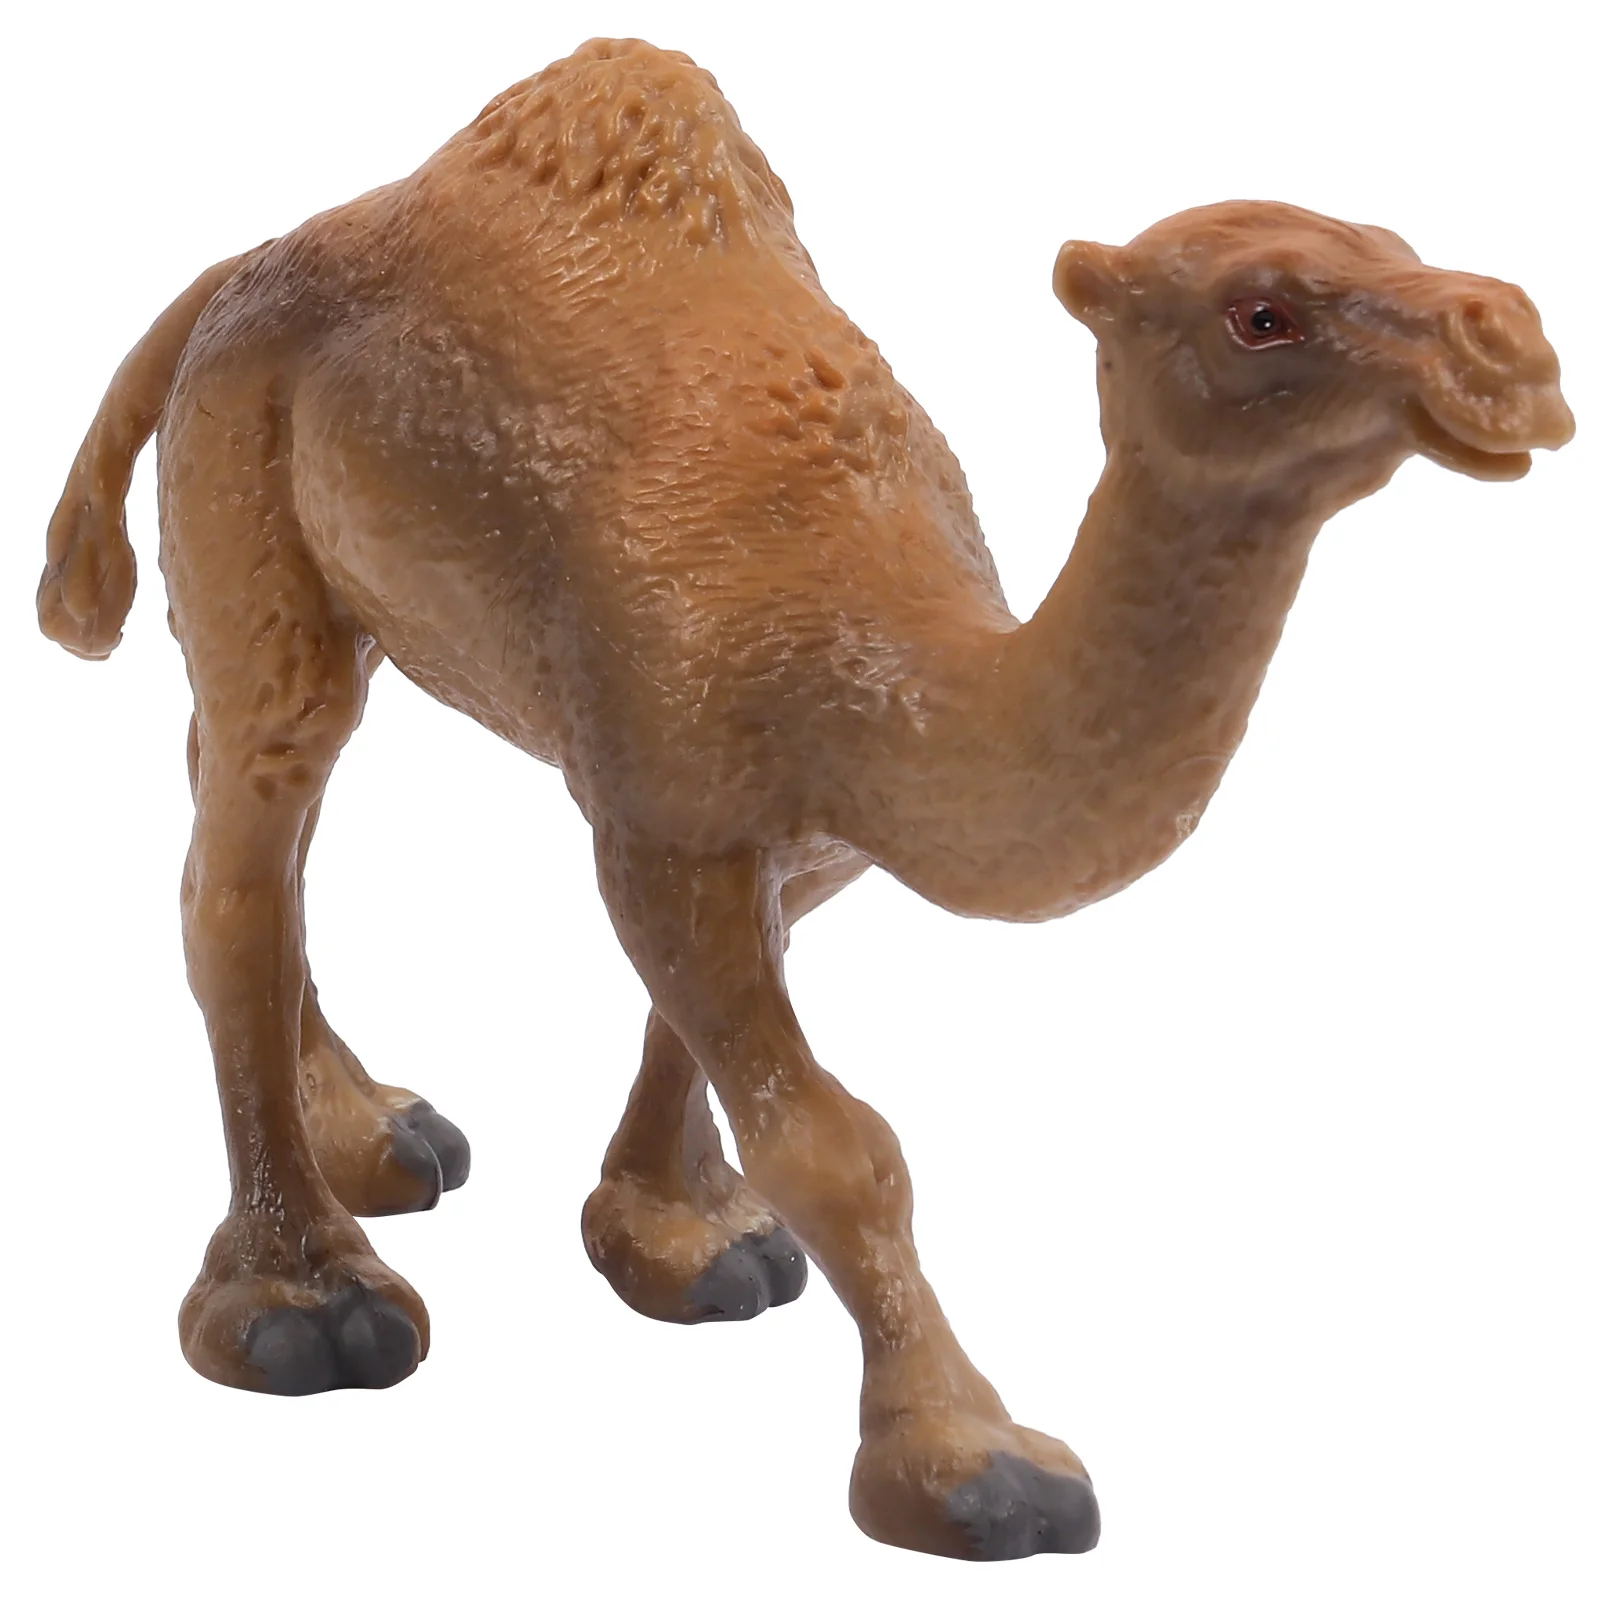 

Camel Animal Toy Toys Figurines Figure Educational Figurine Figures Ornament Simulation Model Adornment Wildlife Llama Jungle